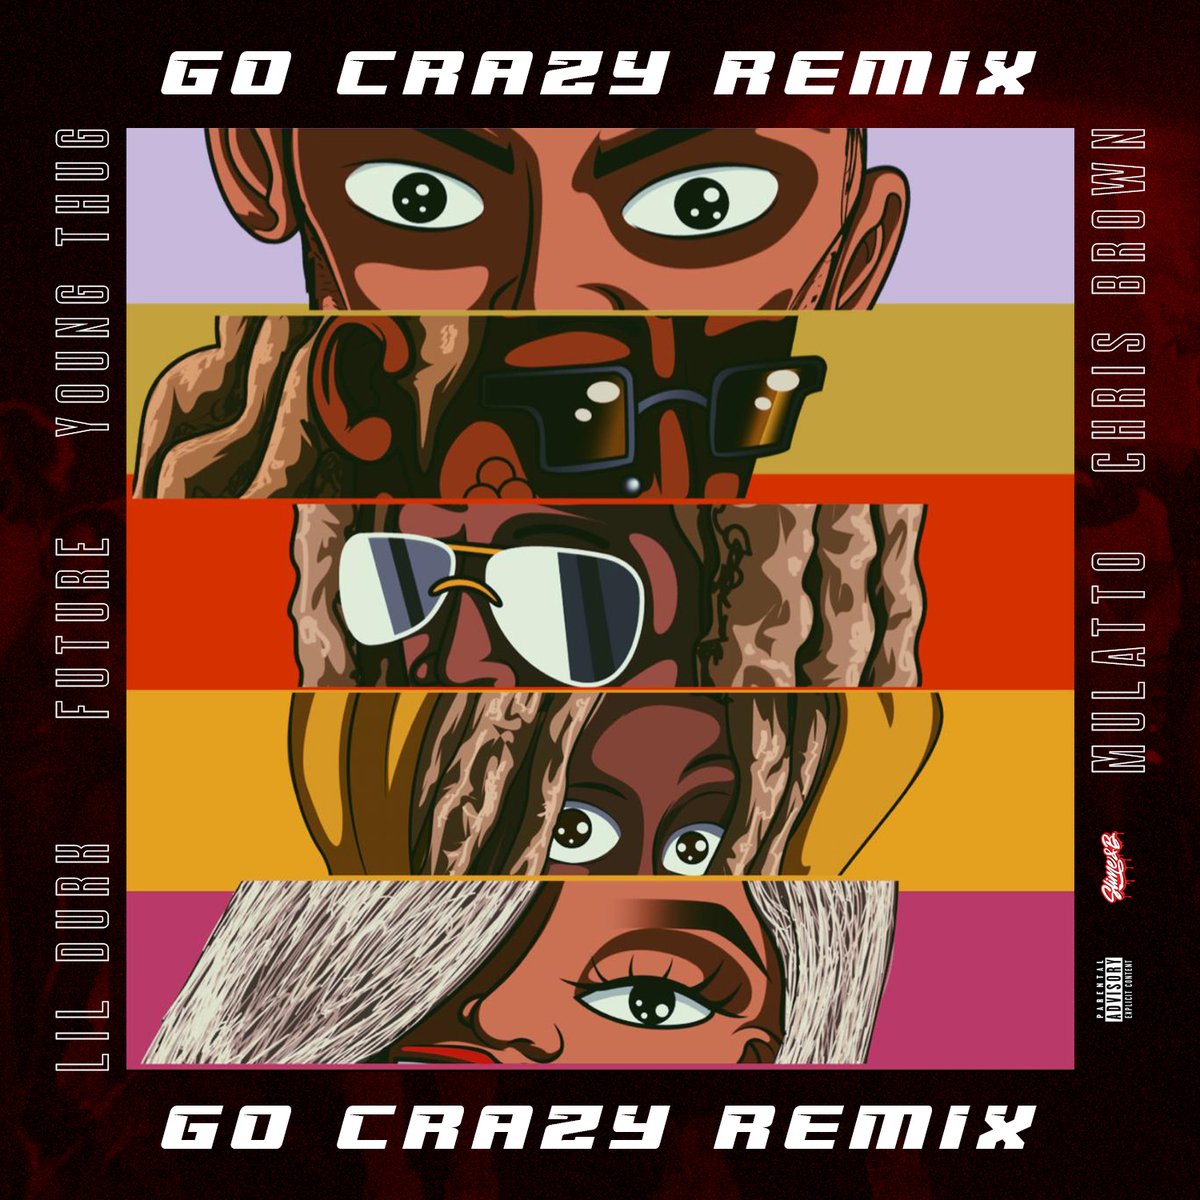 PRESAVE the Go Grazy Remix now!  